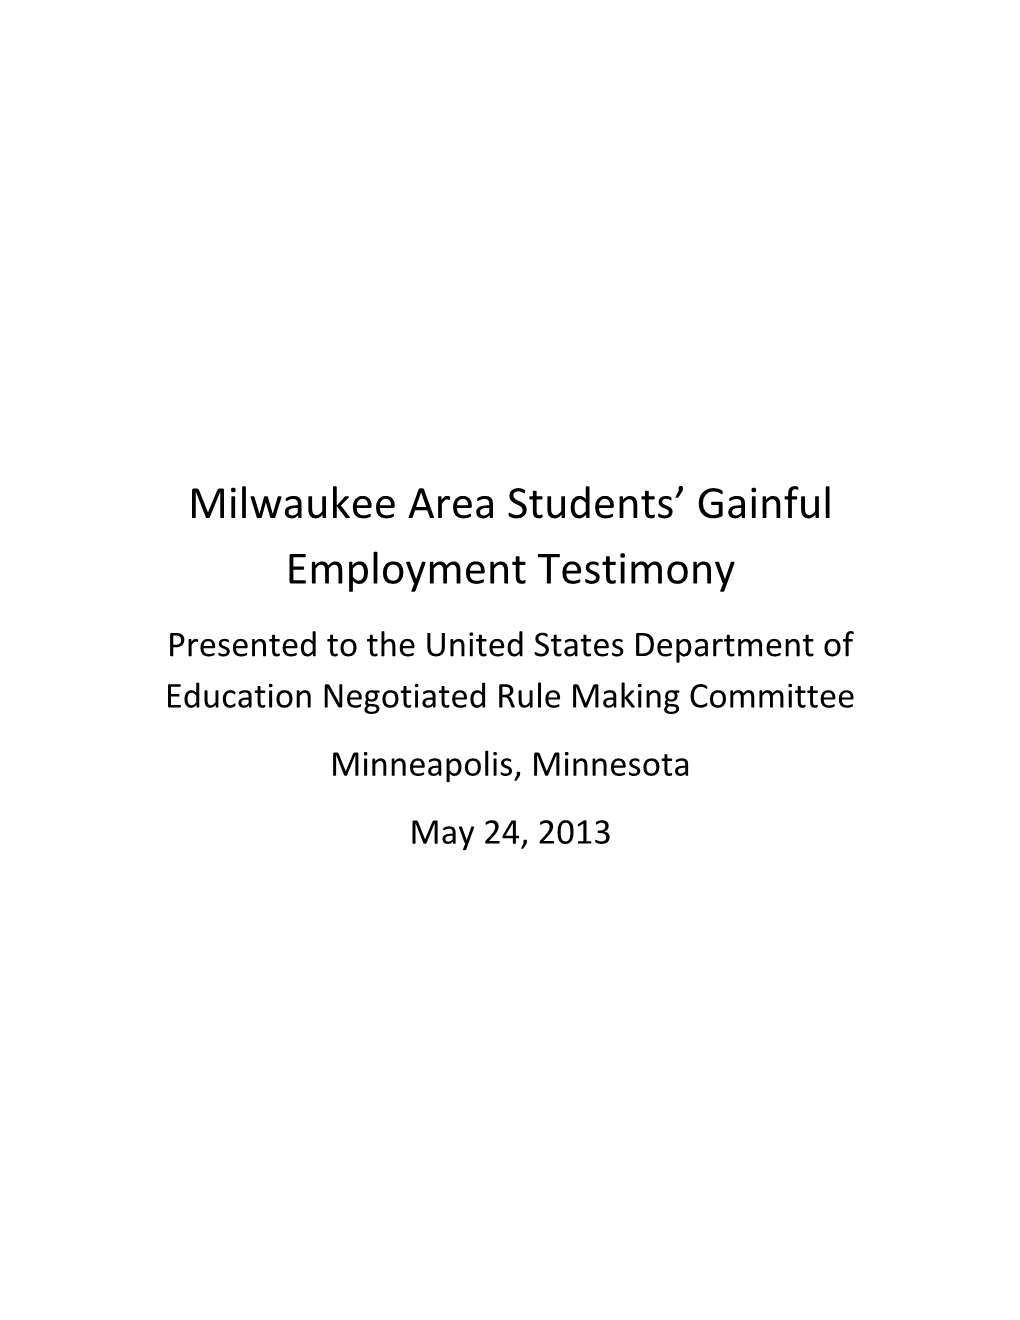 Milwaukee Area Students Gainful Employment Testimony